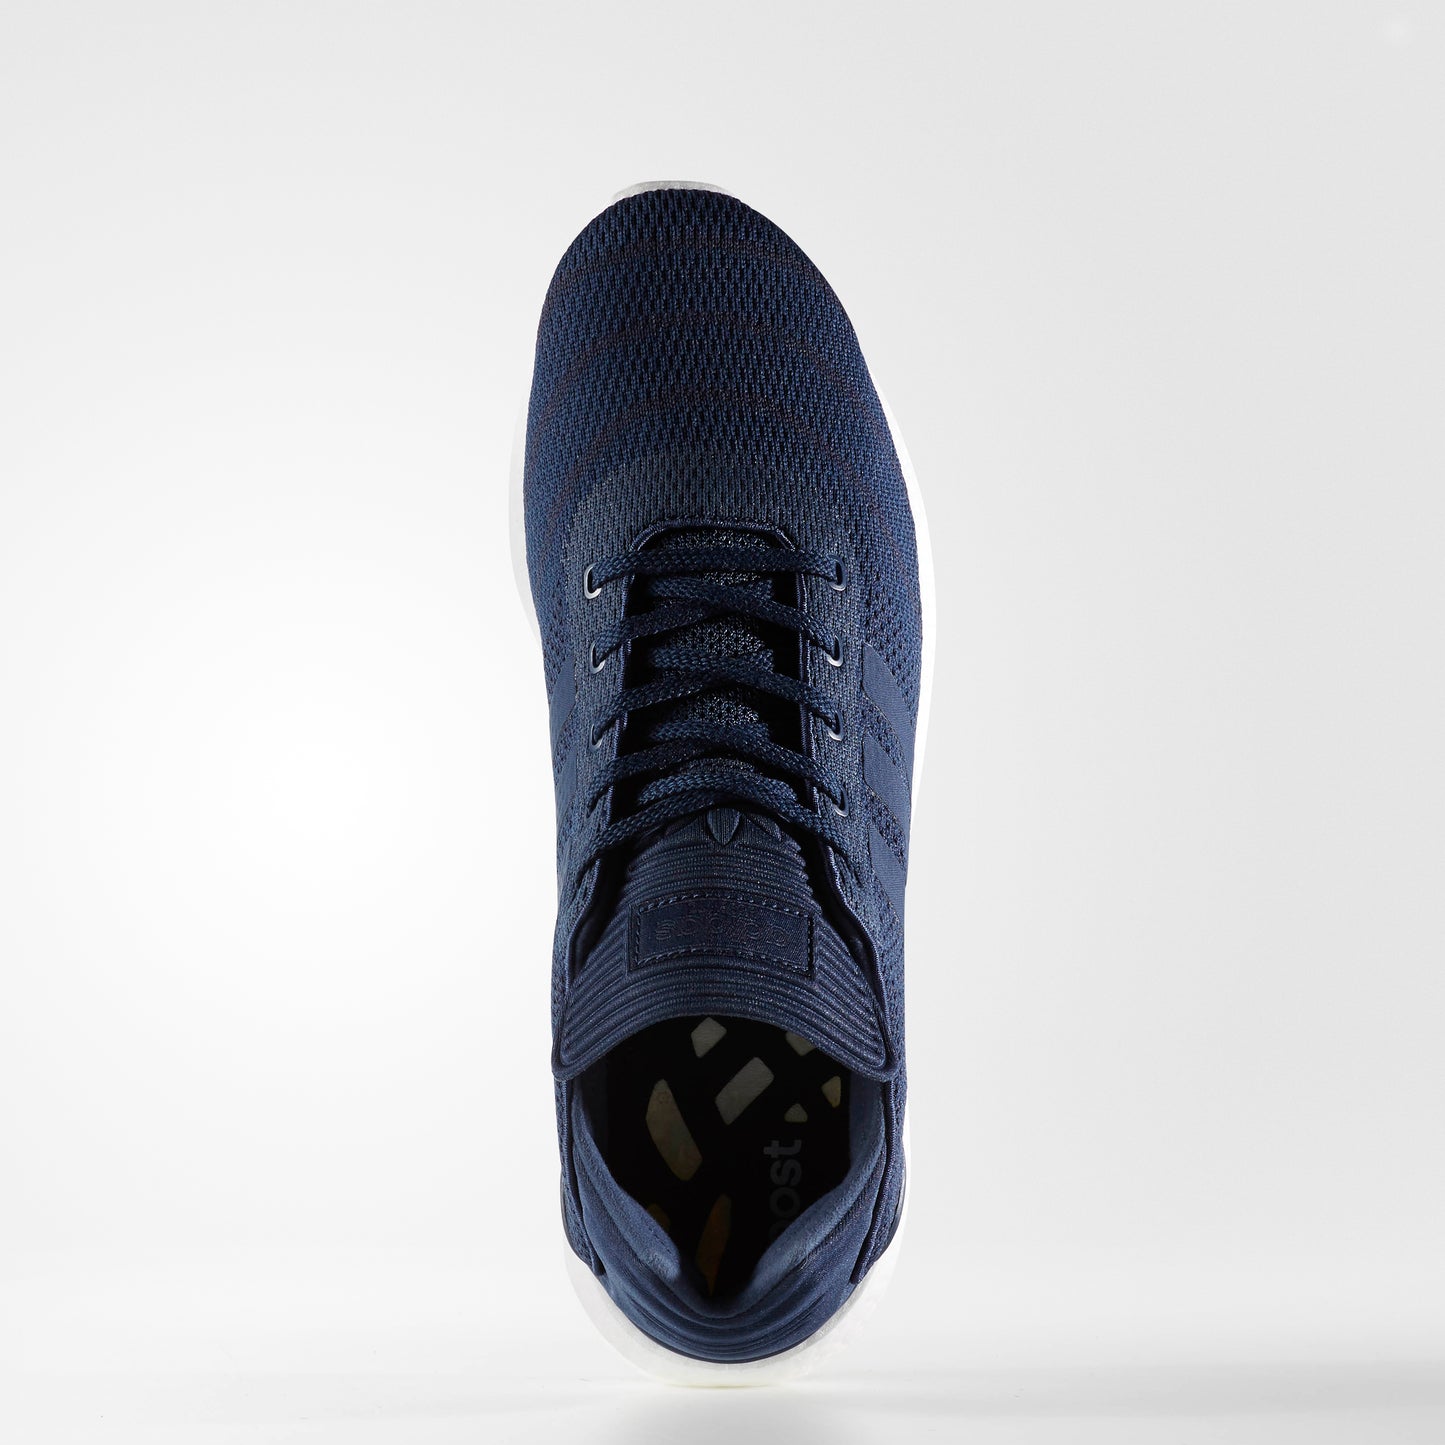 adidas Originals BUSENITZ PURE BOOST Primeknit Shoes - Collegiate Navy | Men's